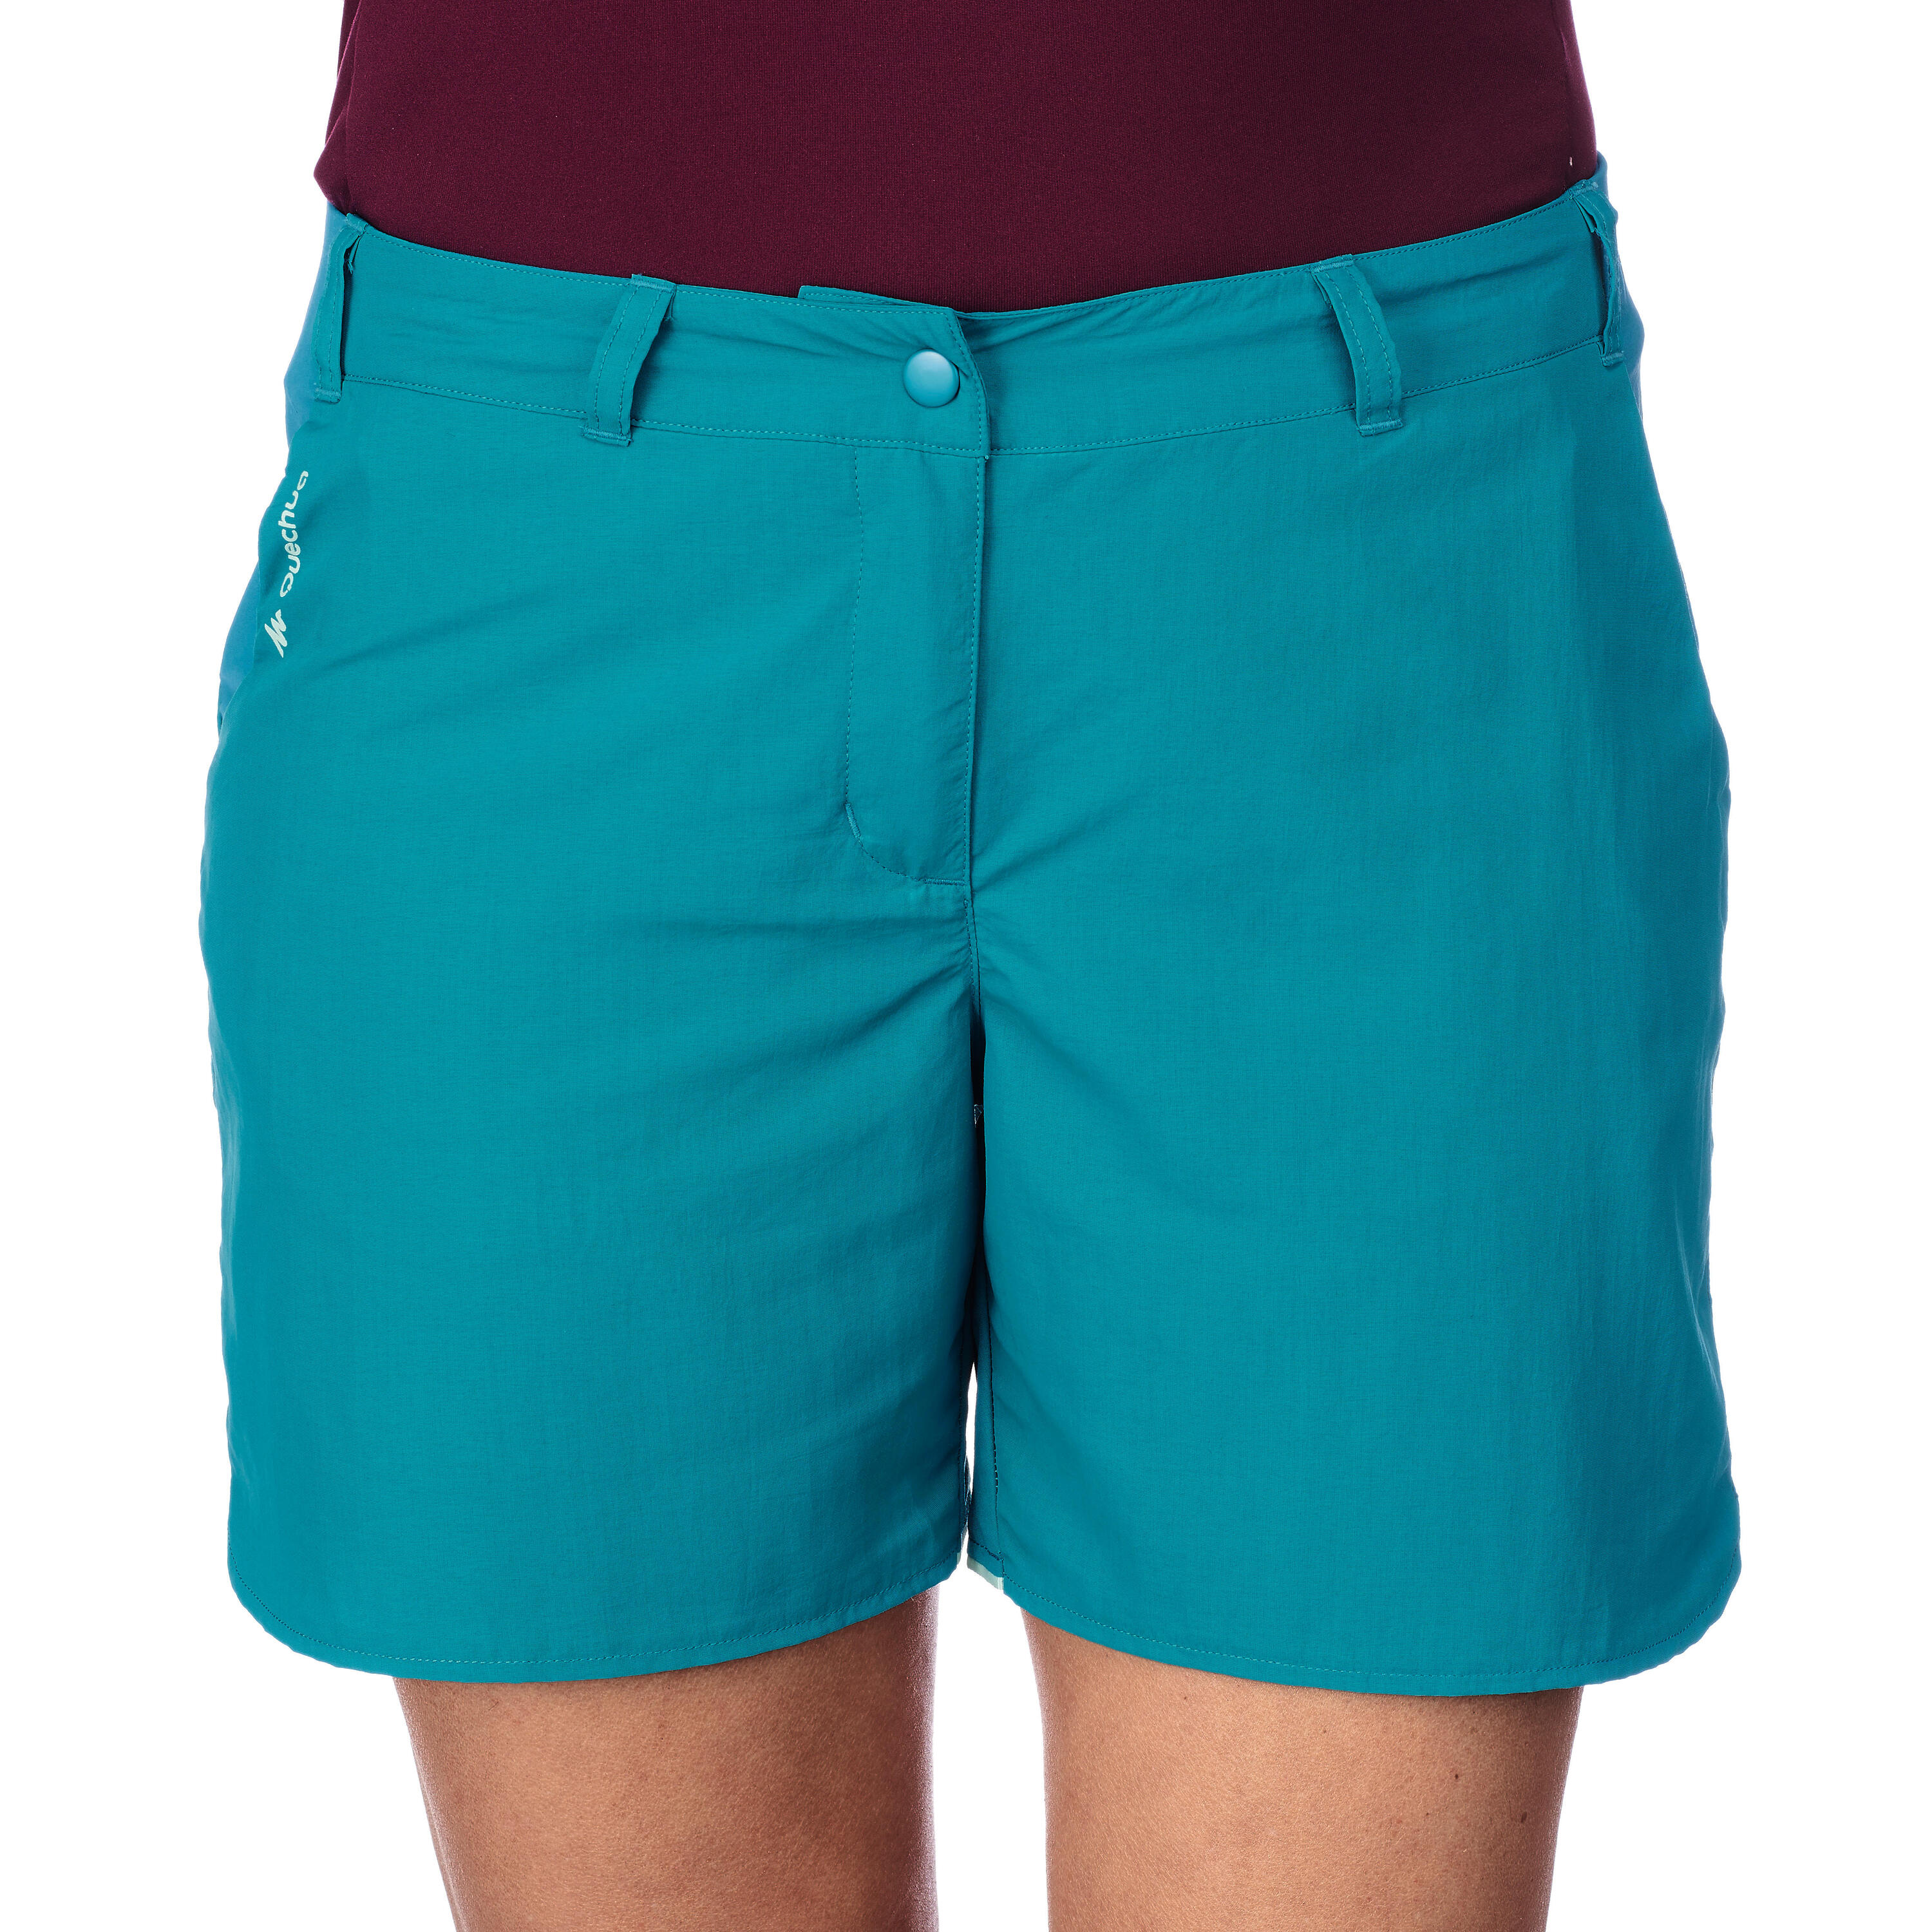 MH100 Women's Mountain Hiking Shorts - Turquoise Blue 2/7